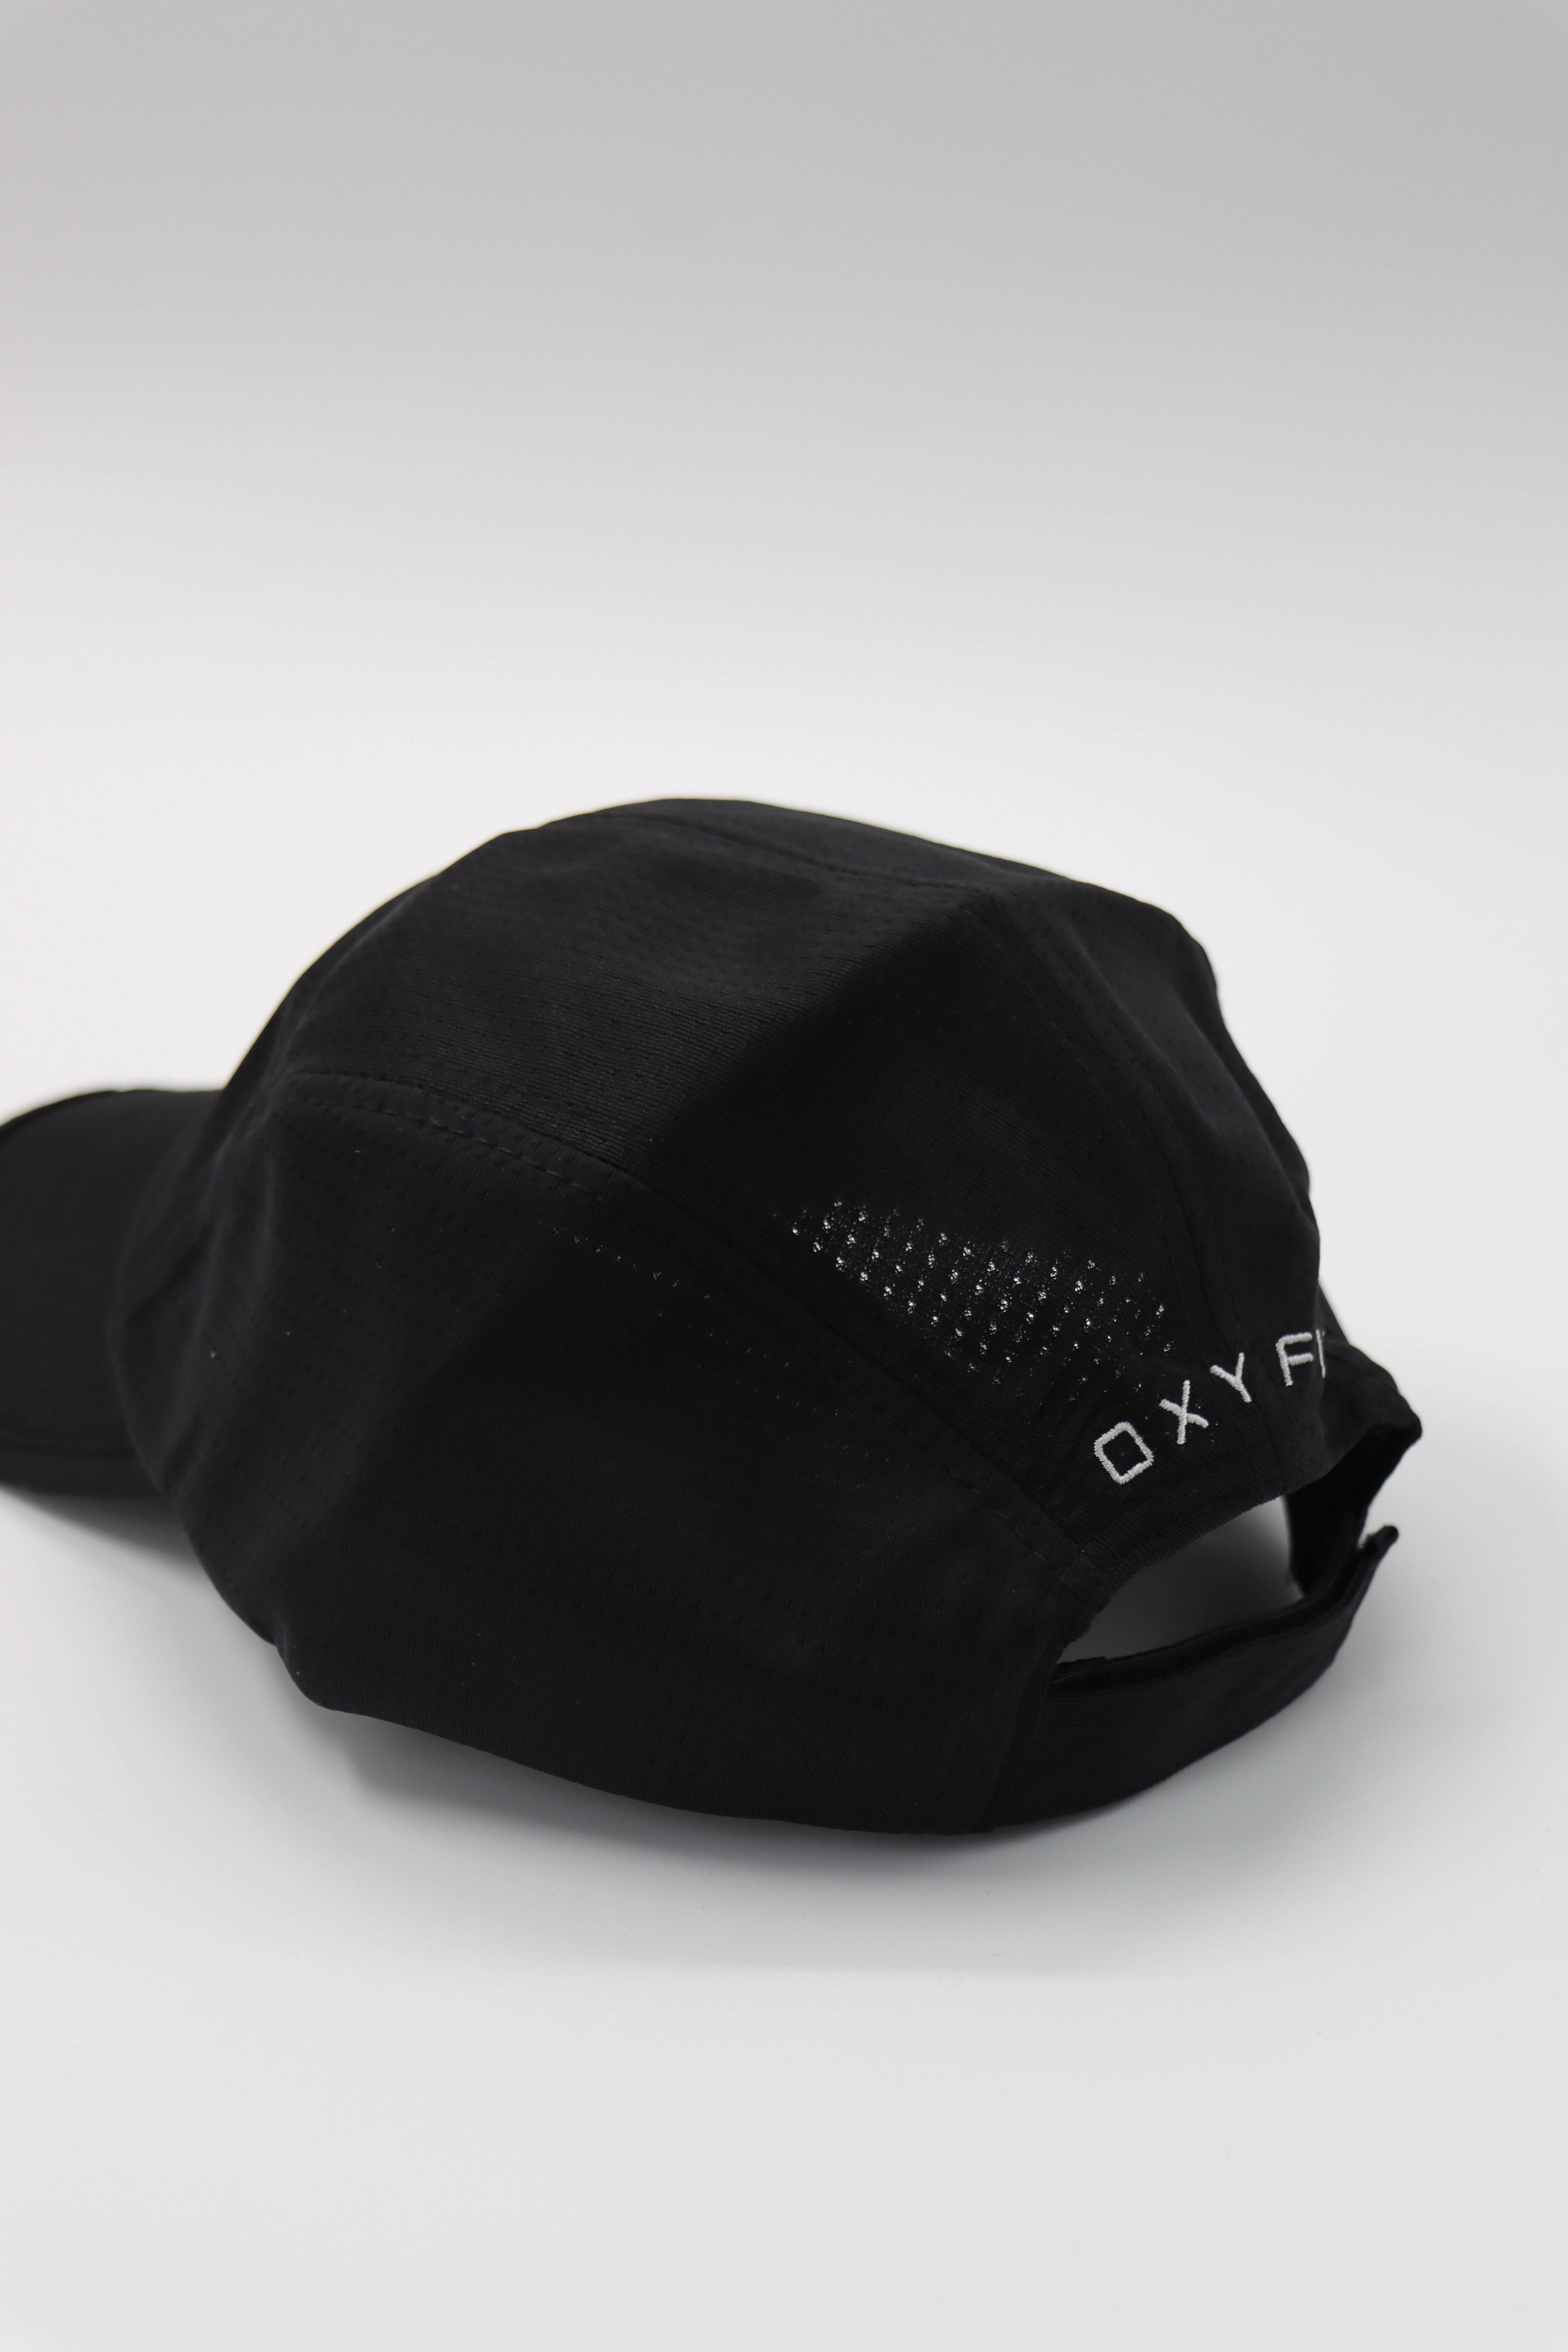 Oxyfit Unisex Performance Hat - Aero Black